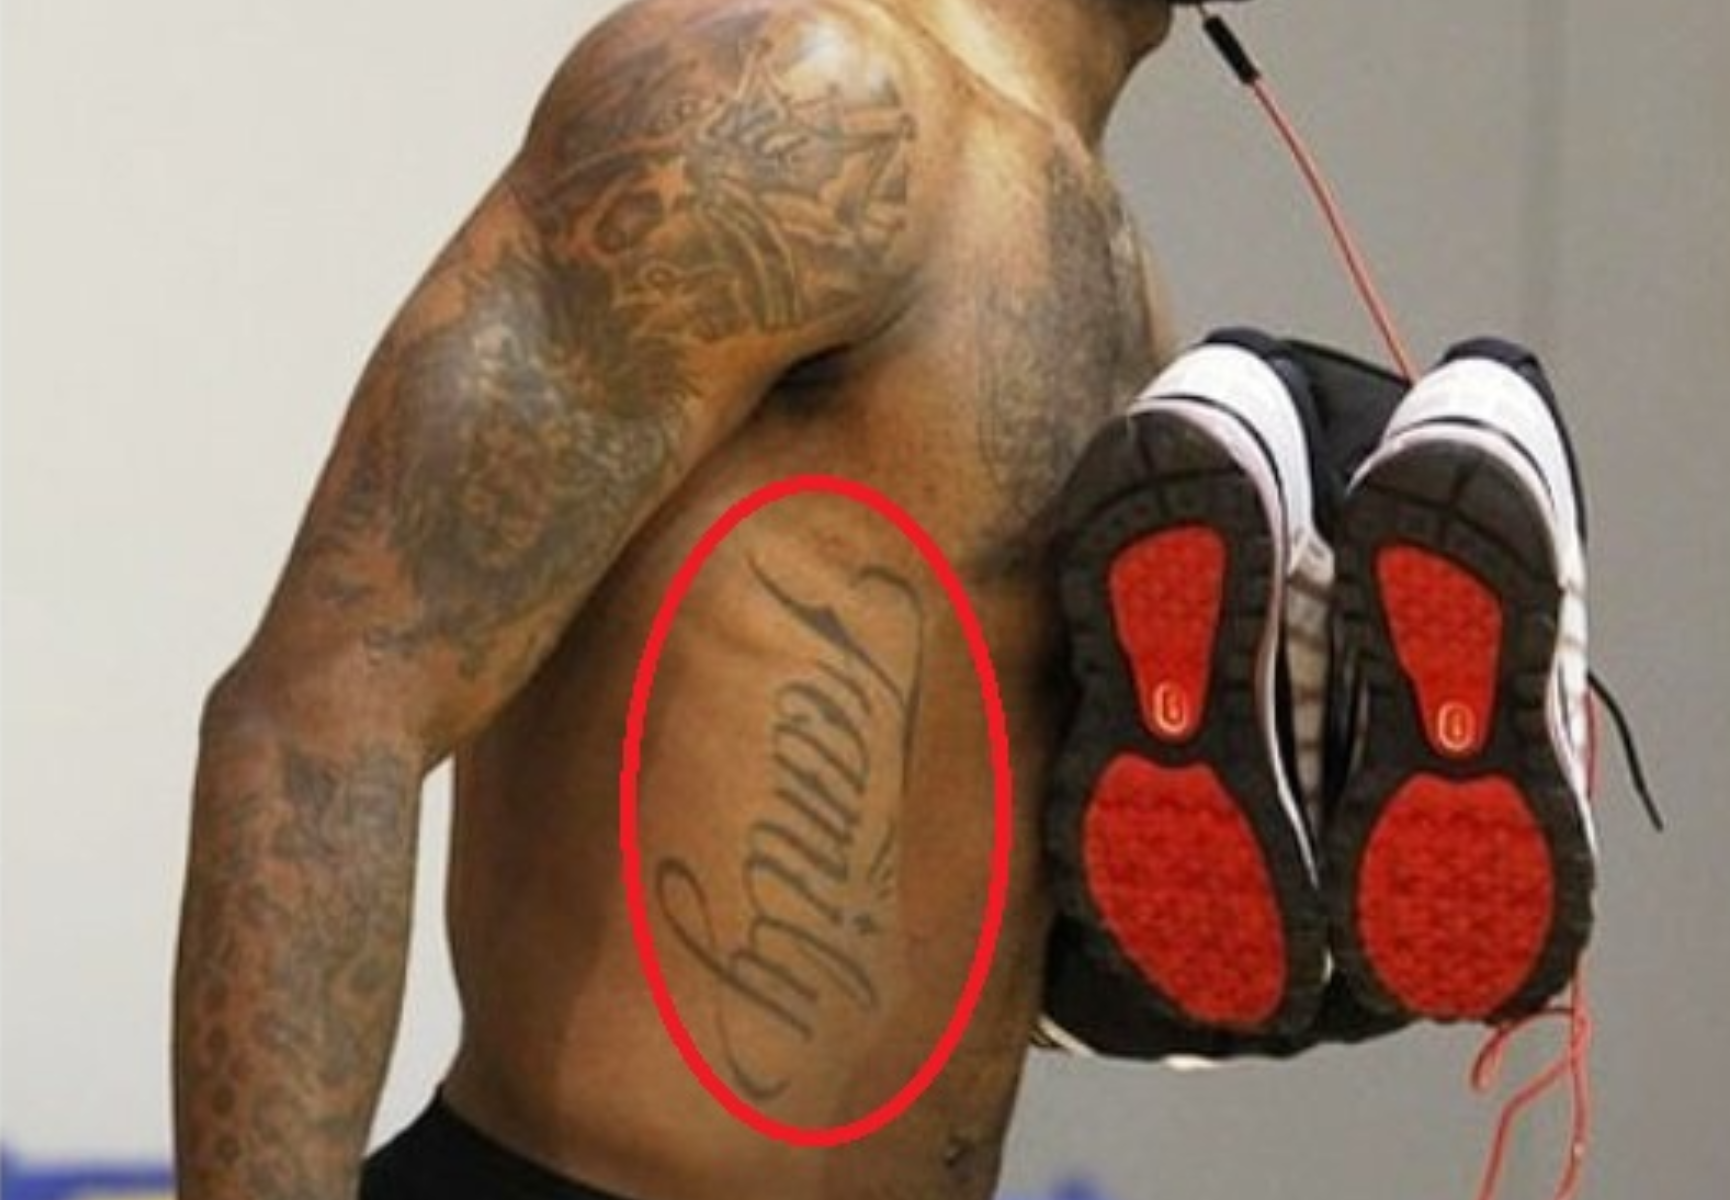 LeBron James has a family tattoo on his right abdomen